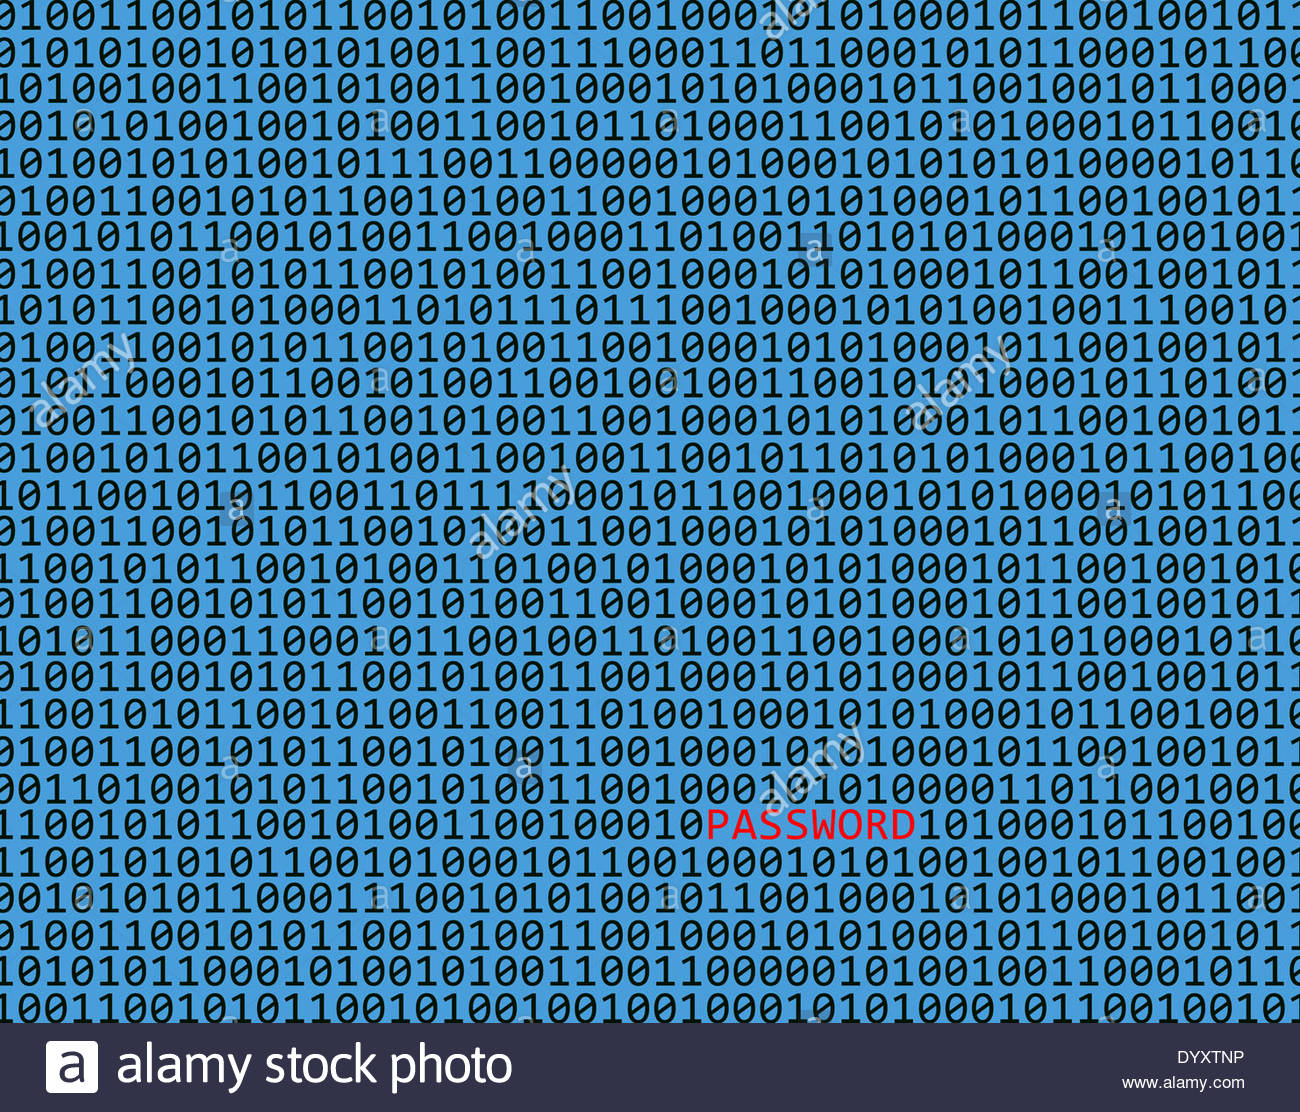 Password Hacking Background Stock Photo Alamy